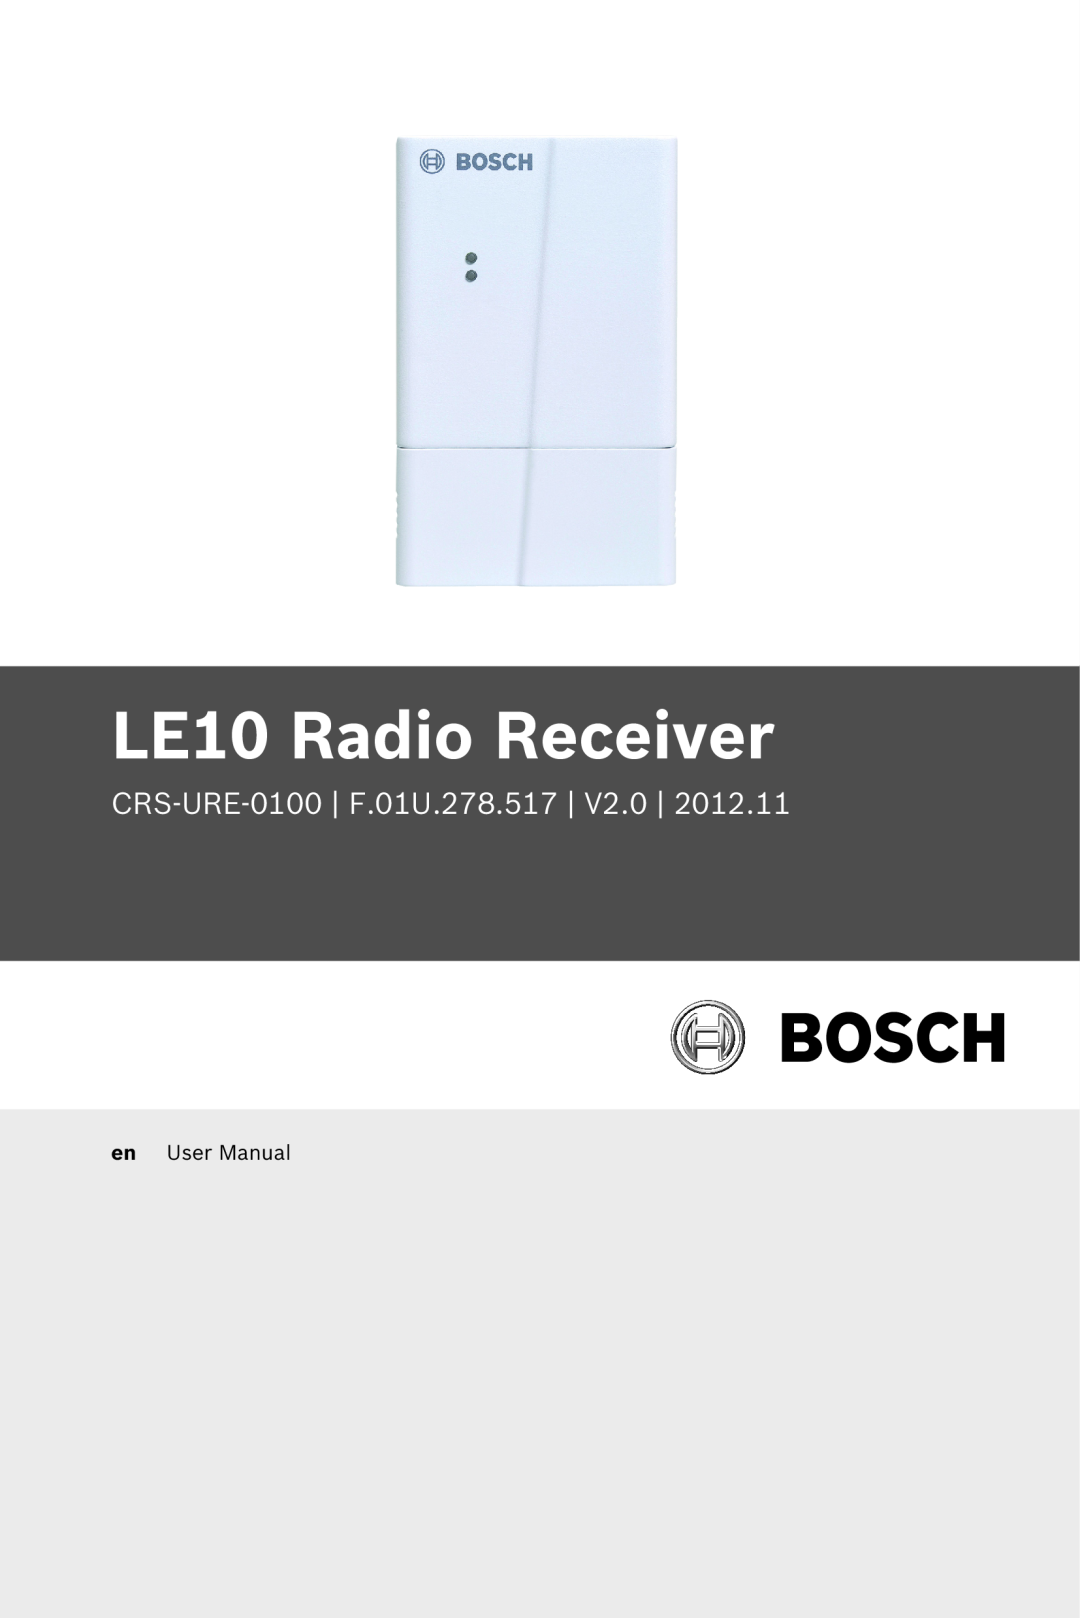 Bosch Appliances user manual LE10 Radio Receiver, CRS-URE-0100 F.01U.278.517 